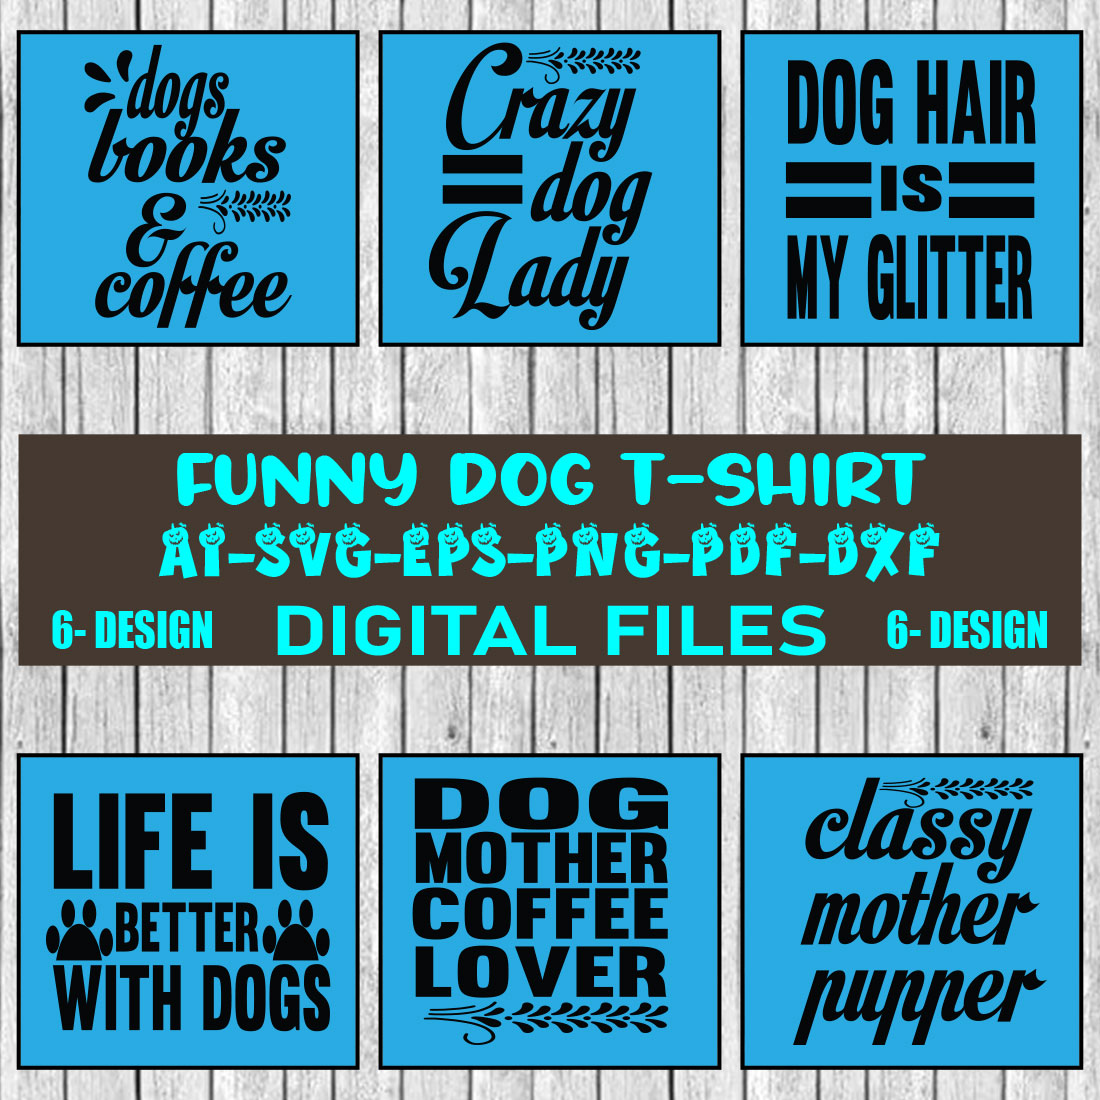 Funny Dog T-shirt Designs Bundle Vol-1 cover image.